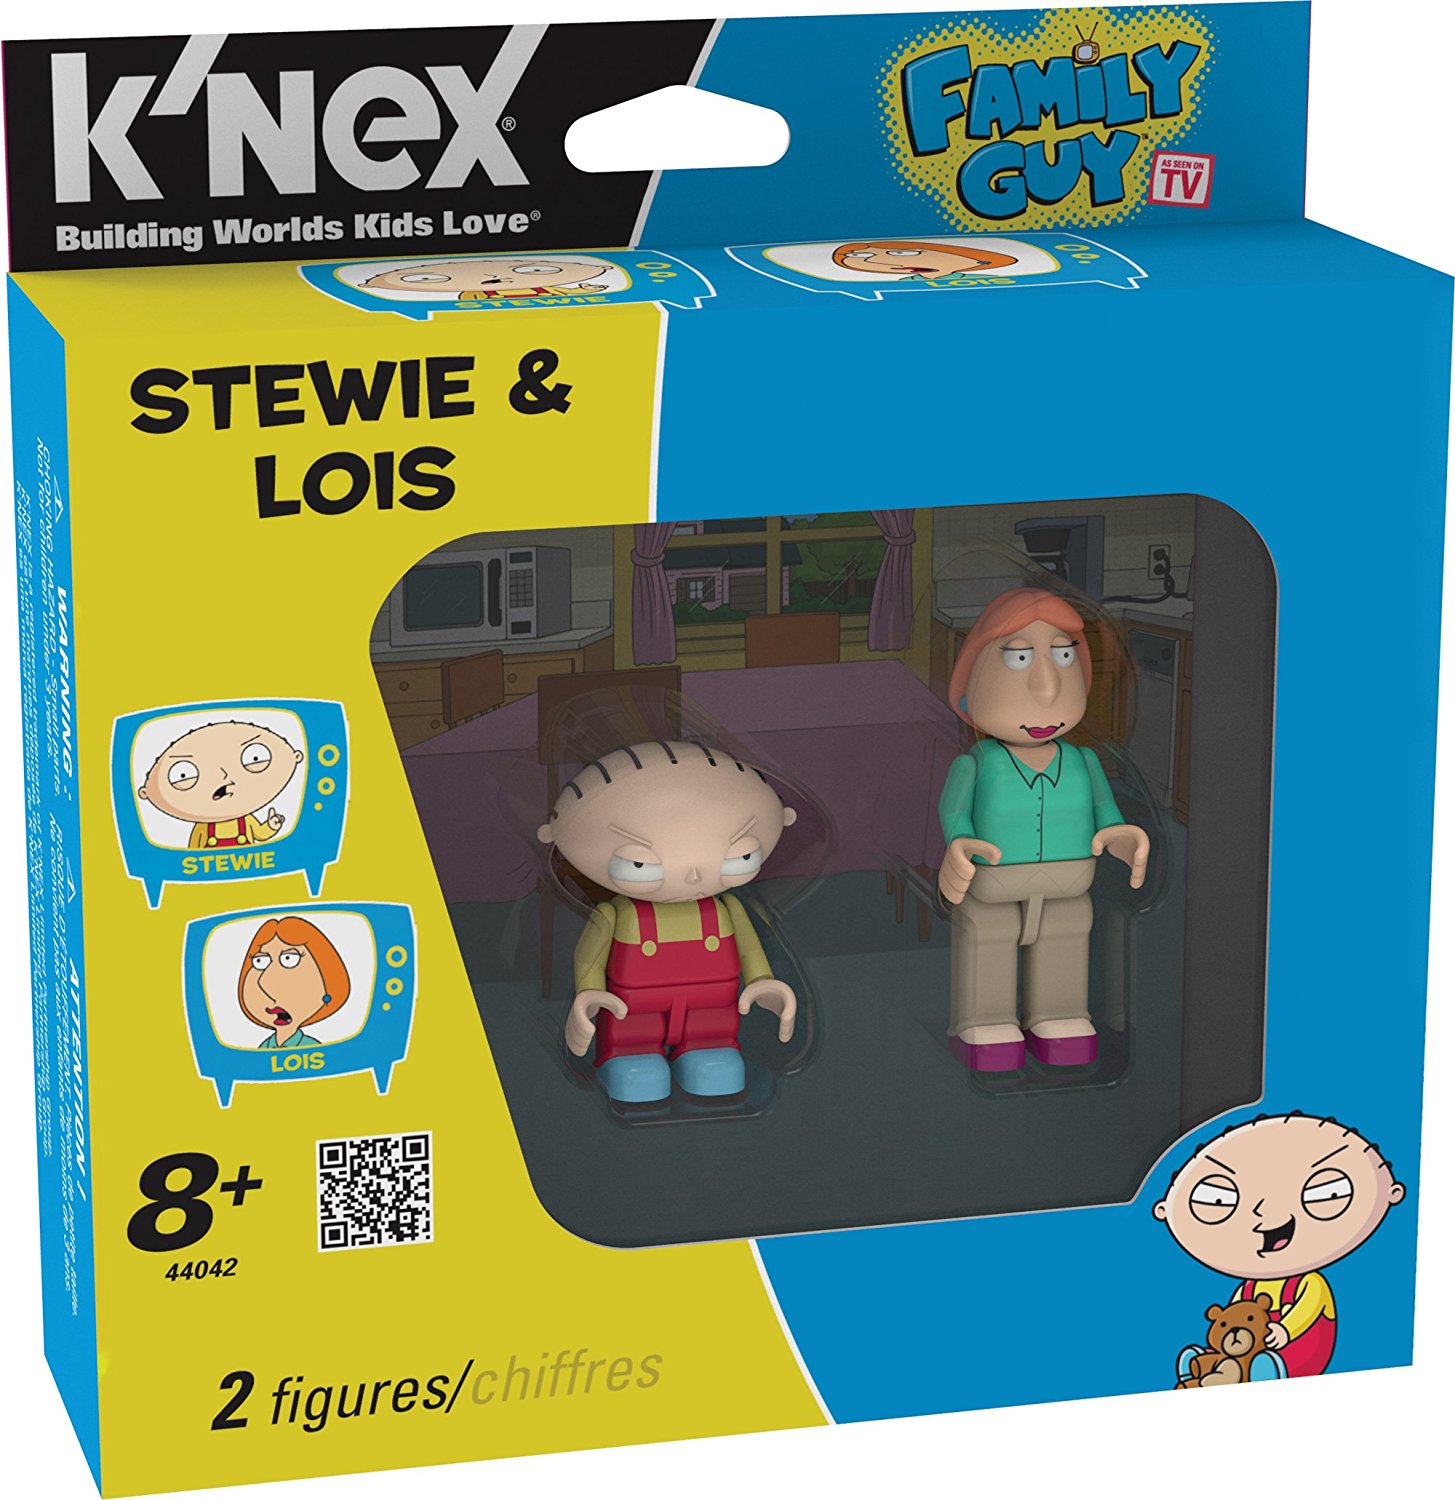 Family Guy: Stewie & Lois Building Figures!